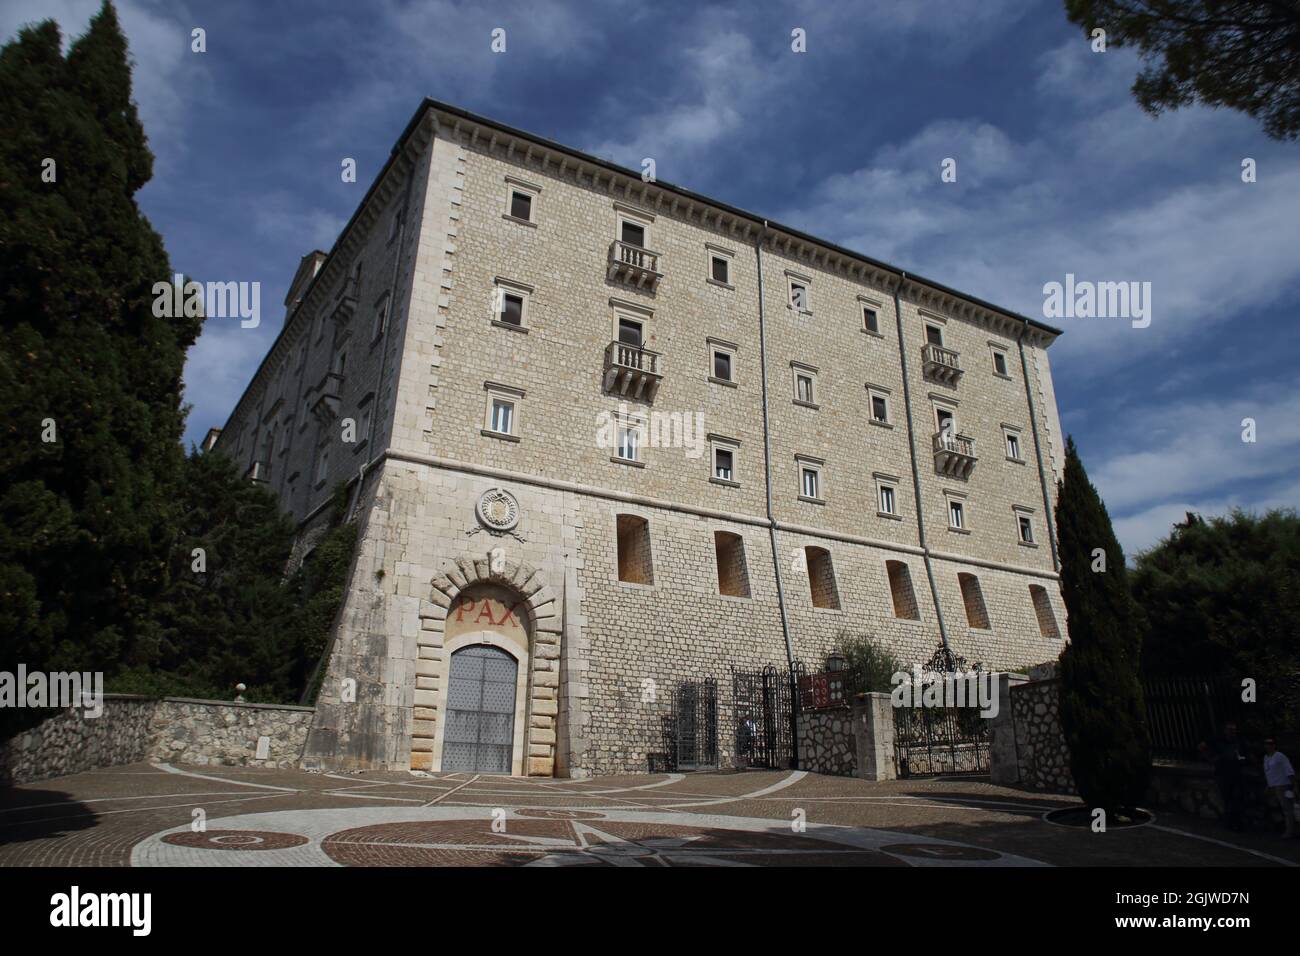 Cassino, Italie. 11 septembre 2021. L'entrée de l'abbaye de Montecassino. Antonio Nardelli / Alamy Banque D'Images